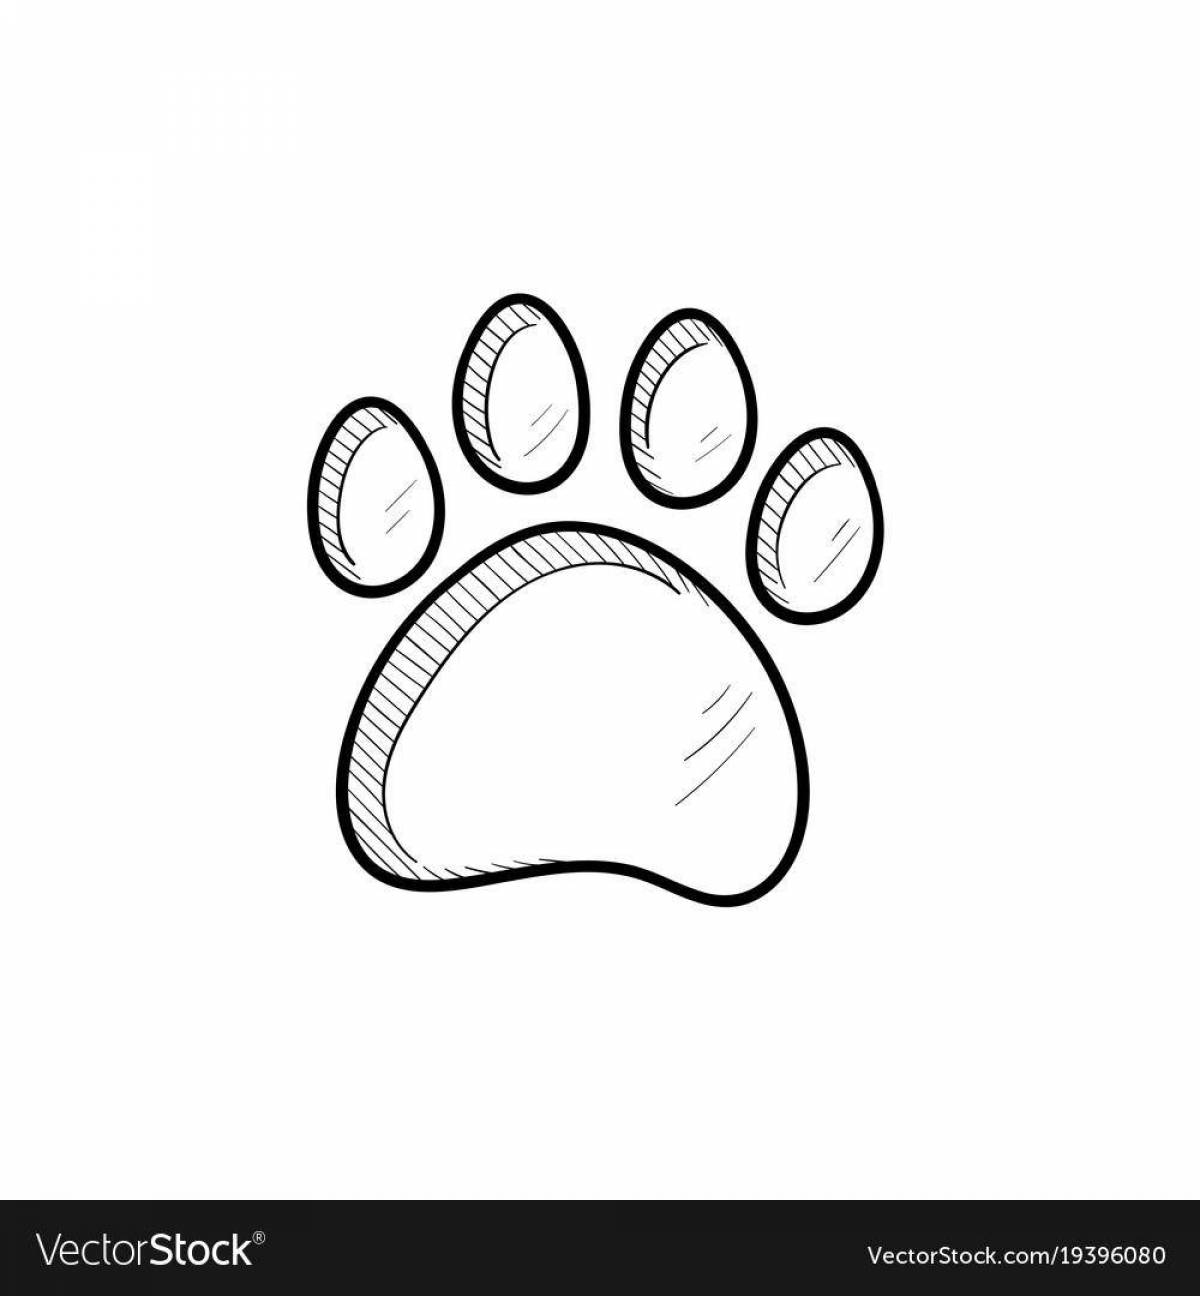 Cute cat paw coloring book